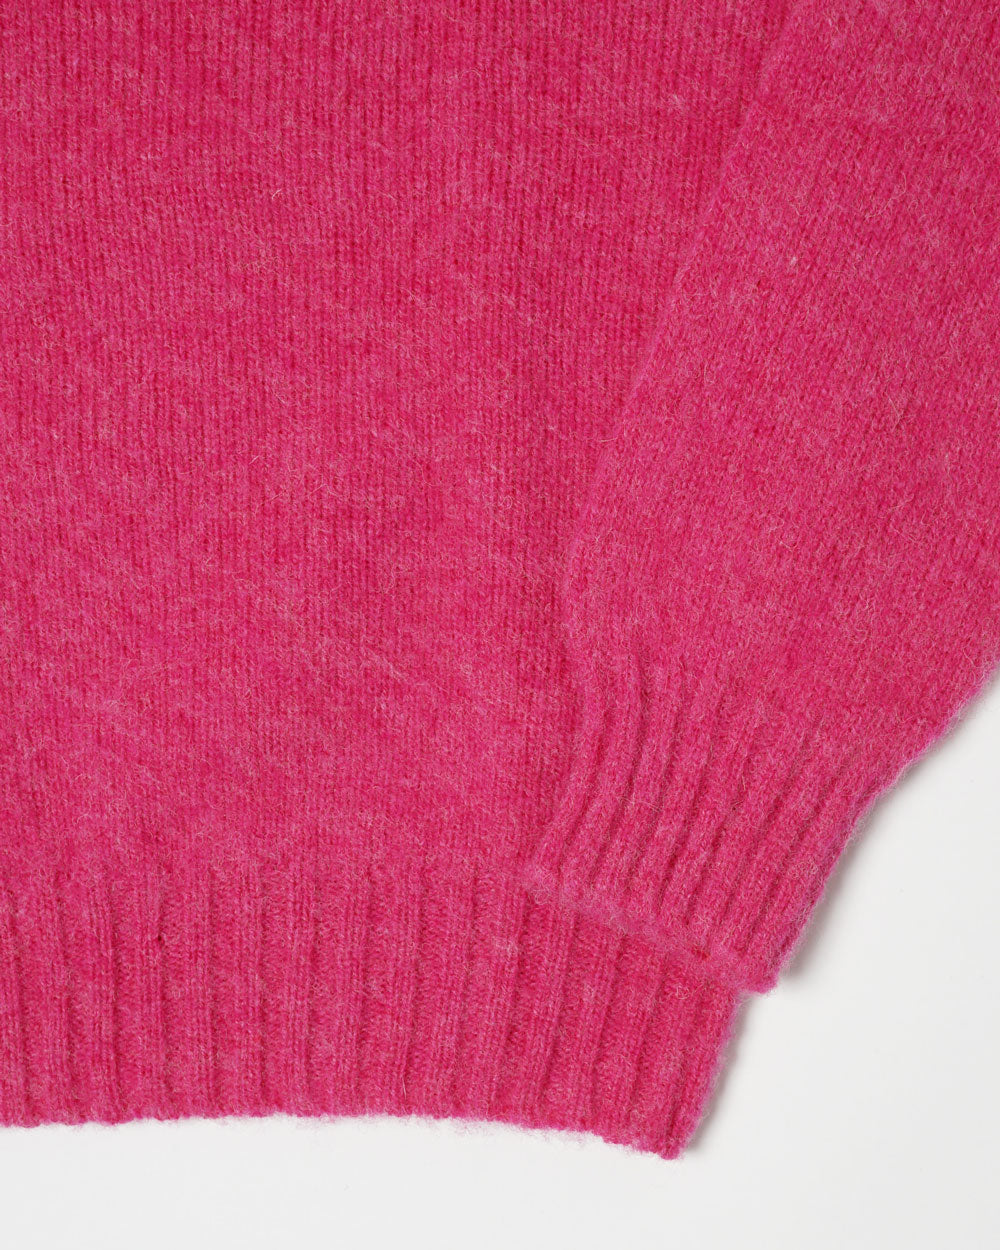 Brushed Shetland Sweater Crew Neck / Pink